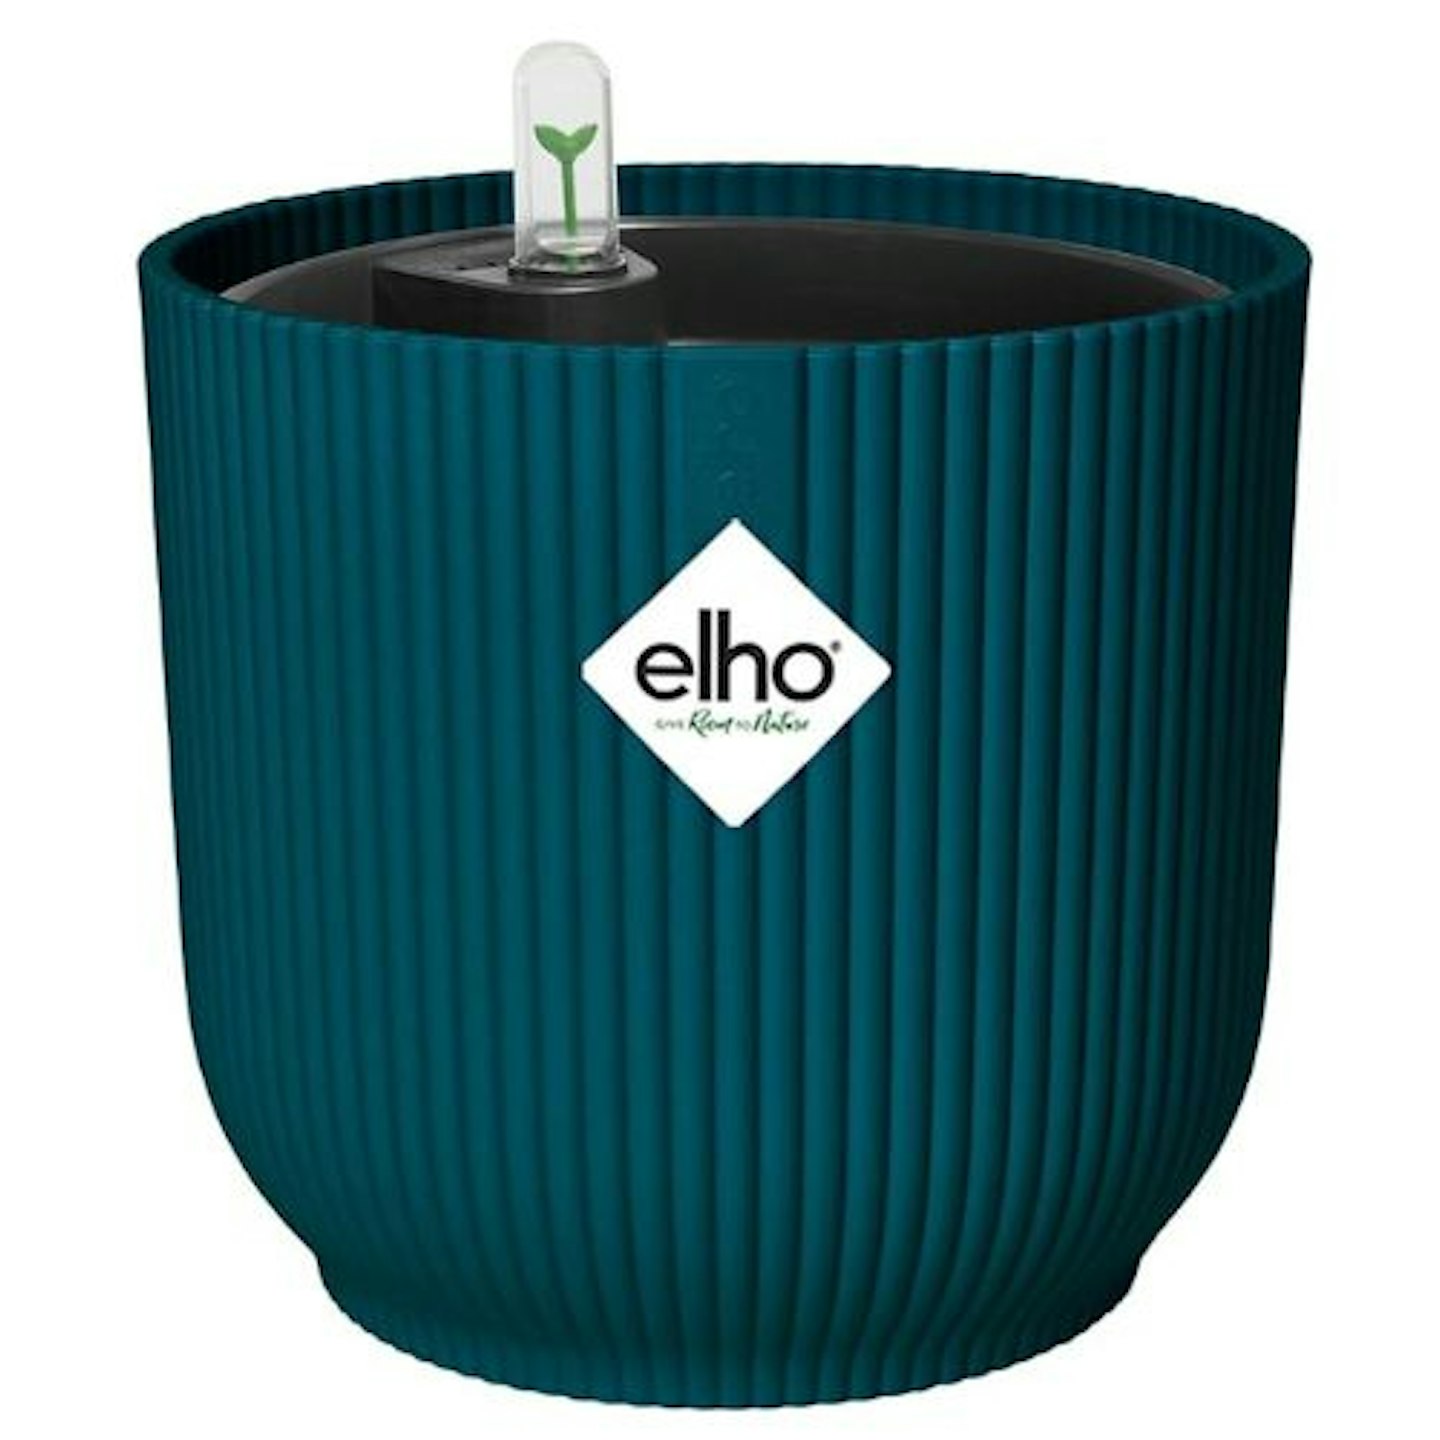 elho Vibes Fold Round Flower Pot